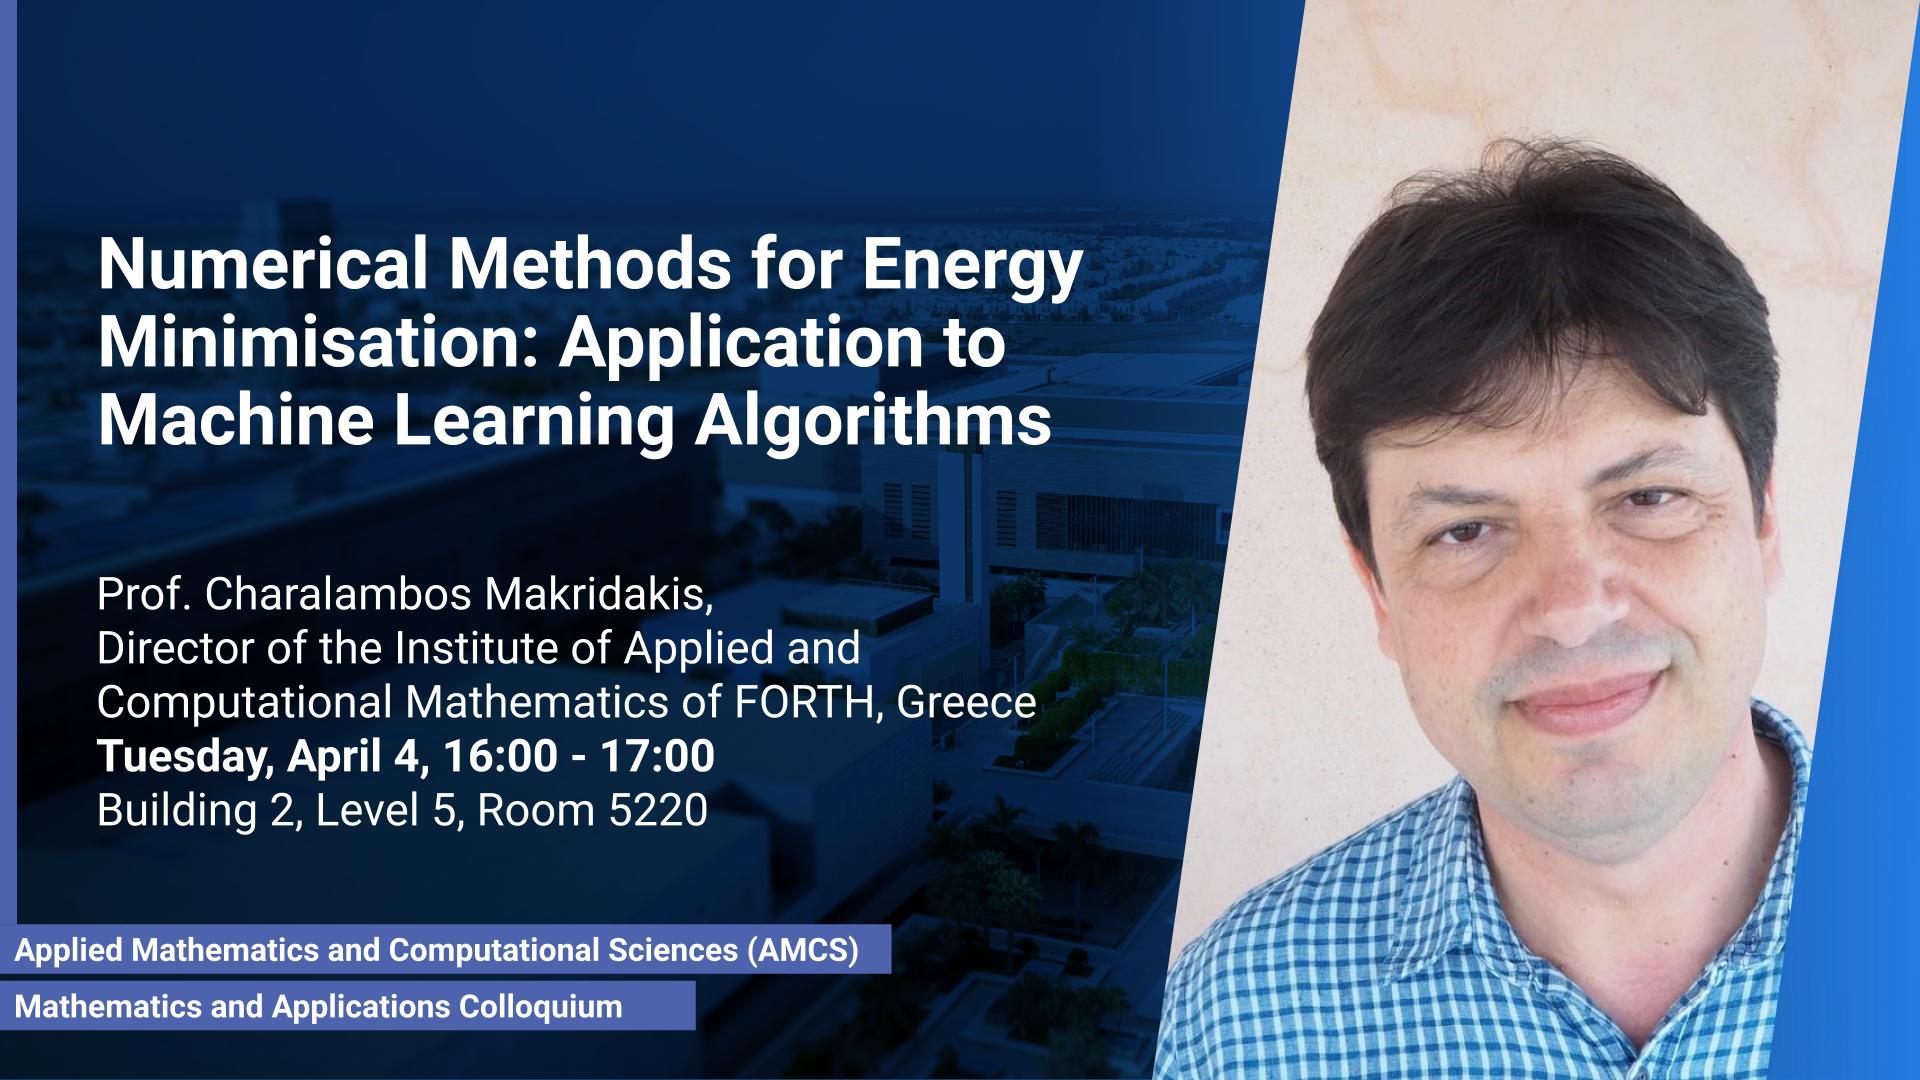 KAUST-CEMSE-AMCS-Mathematics-Application-Colloquium-Prof. Charalambos-Makridakis-Numerical-Methods-Energy-Minimisation